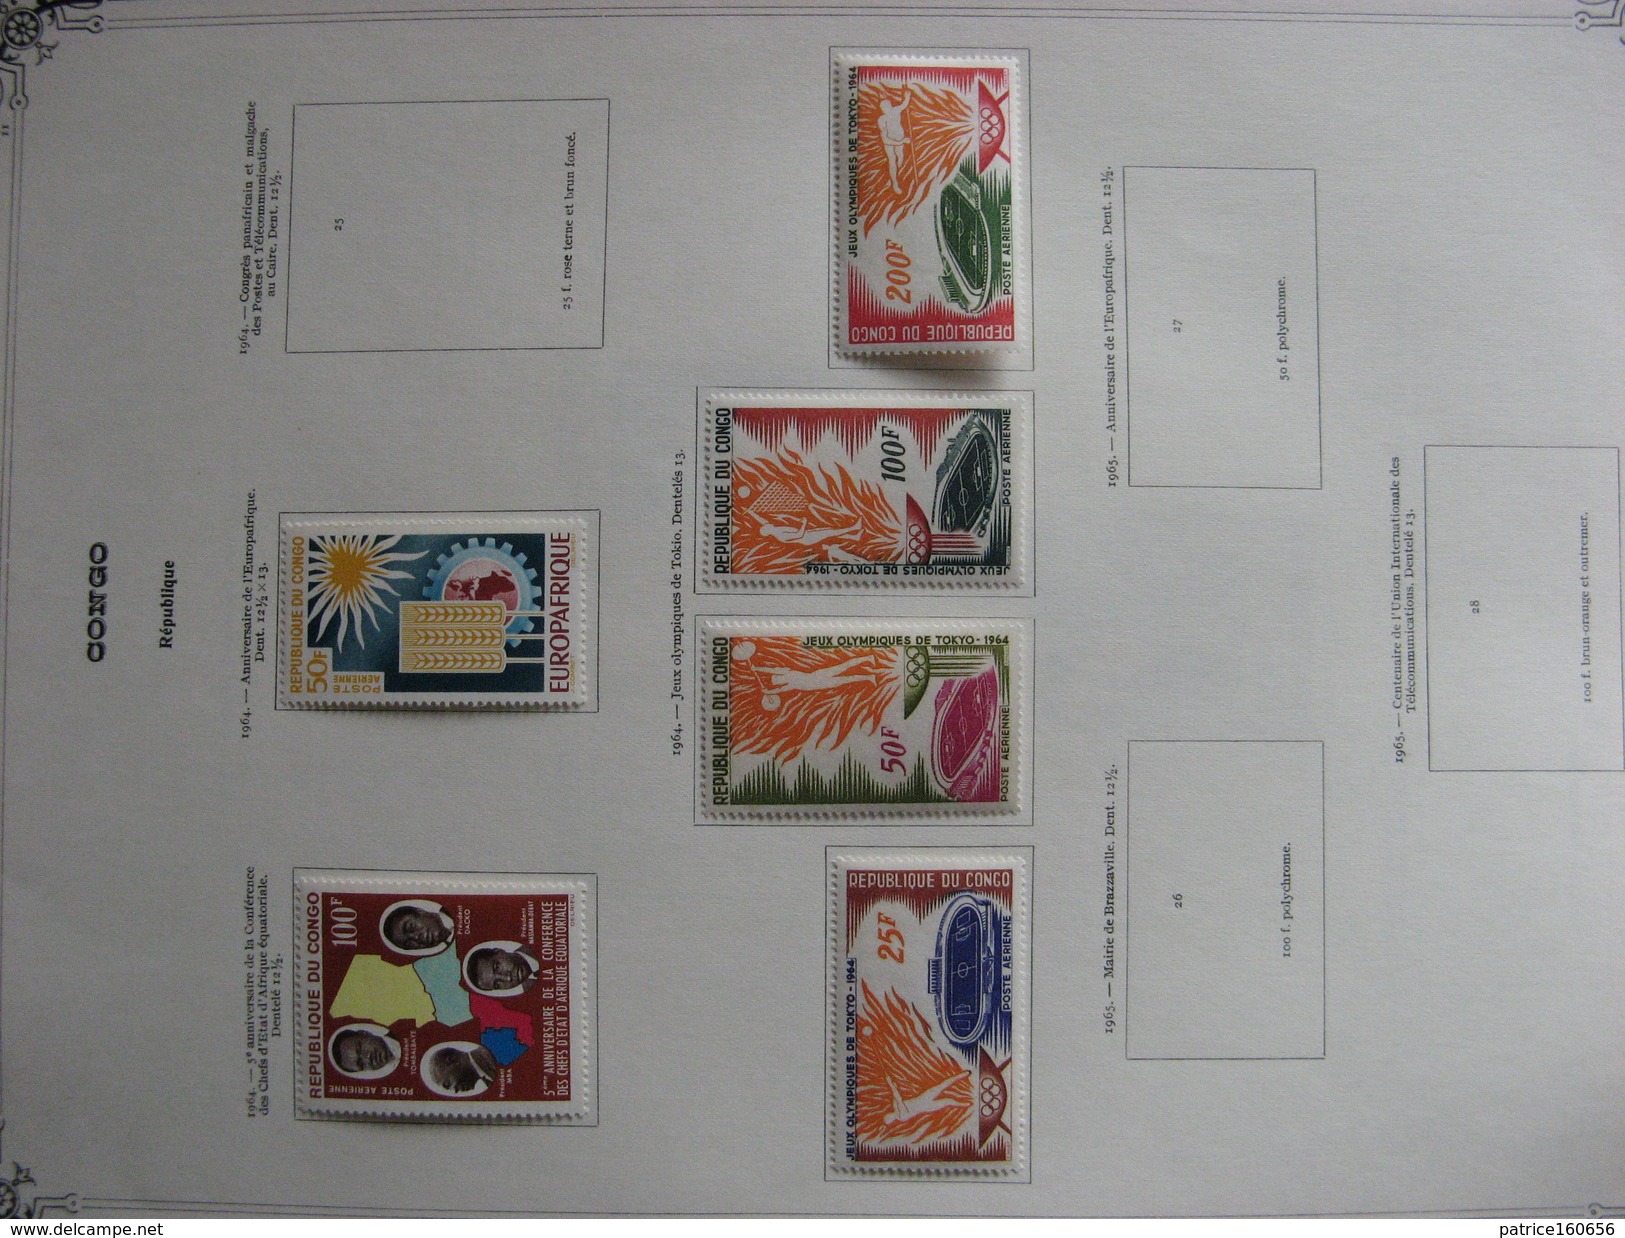 TB petite collection de timbres du CONGO . Neufs X.